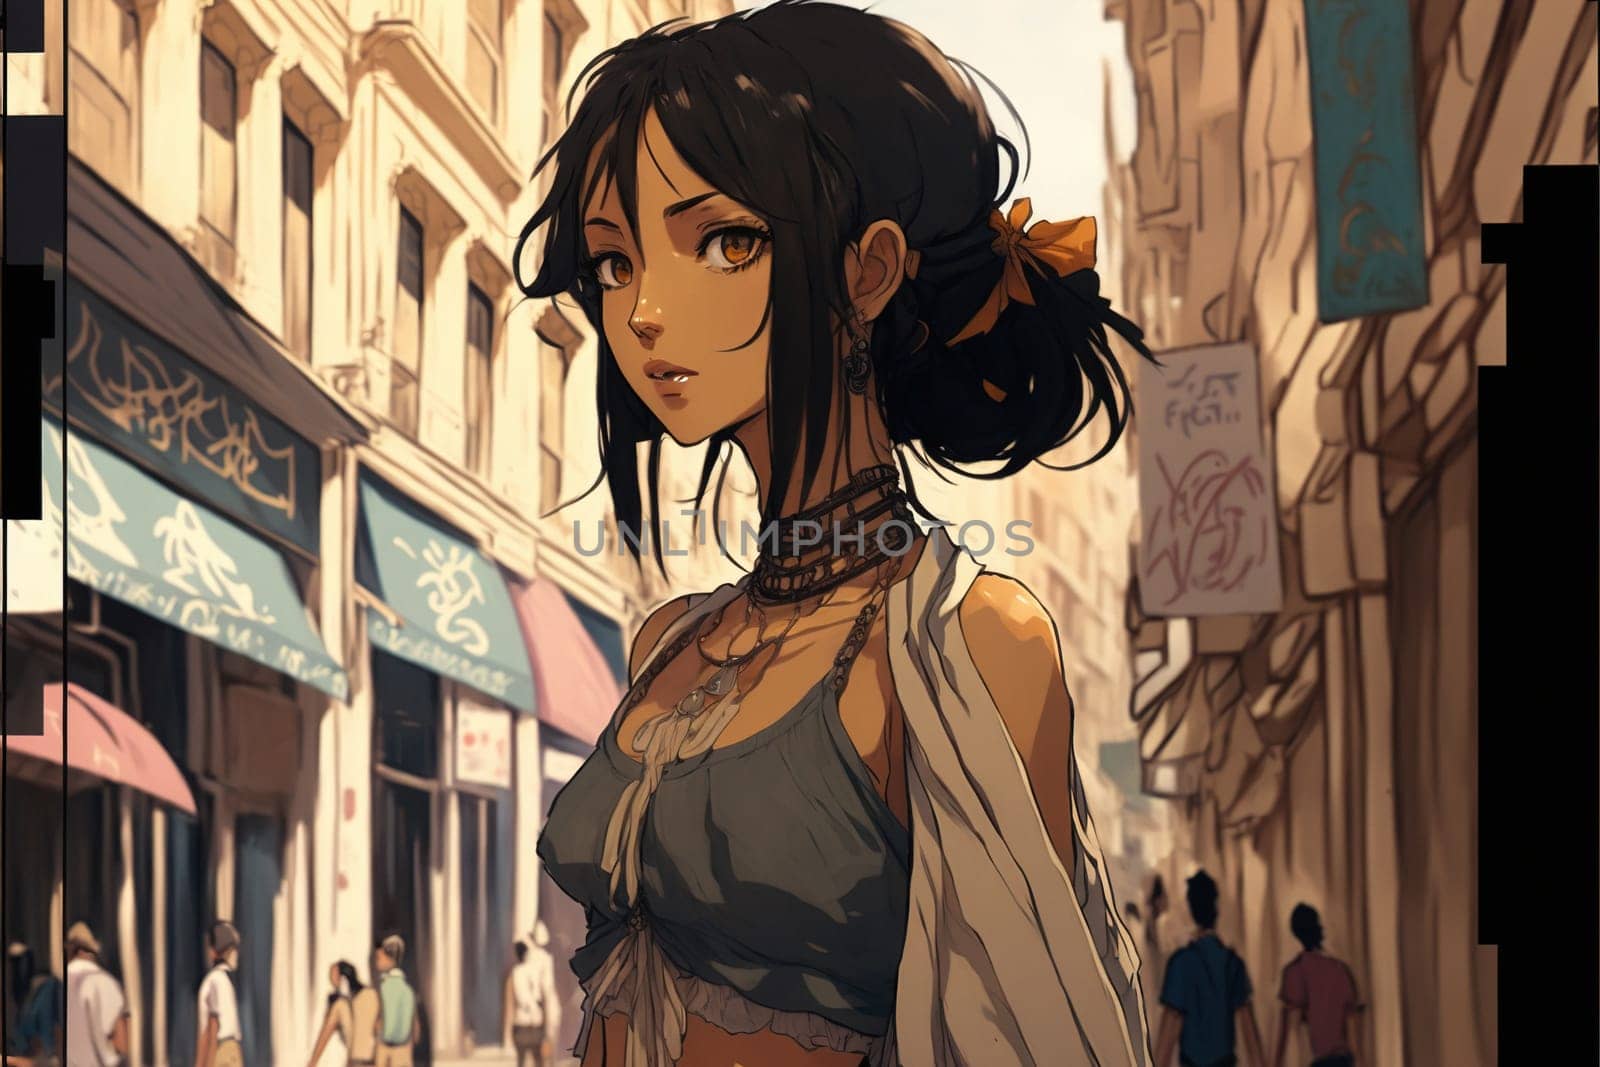 Stunning Indian-inspired Anime Girl with Sleek Black Hair Walking Gracefully on Urban Streets by igor010